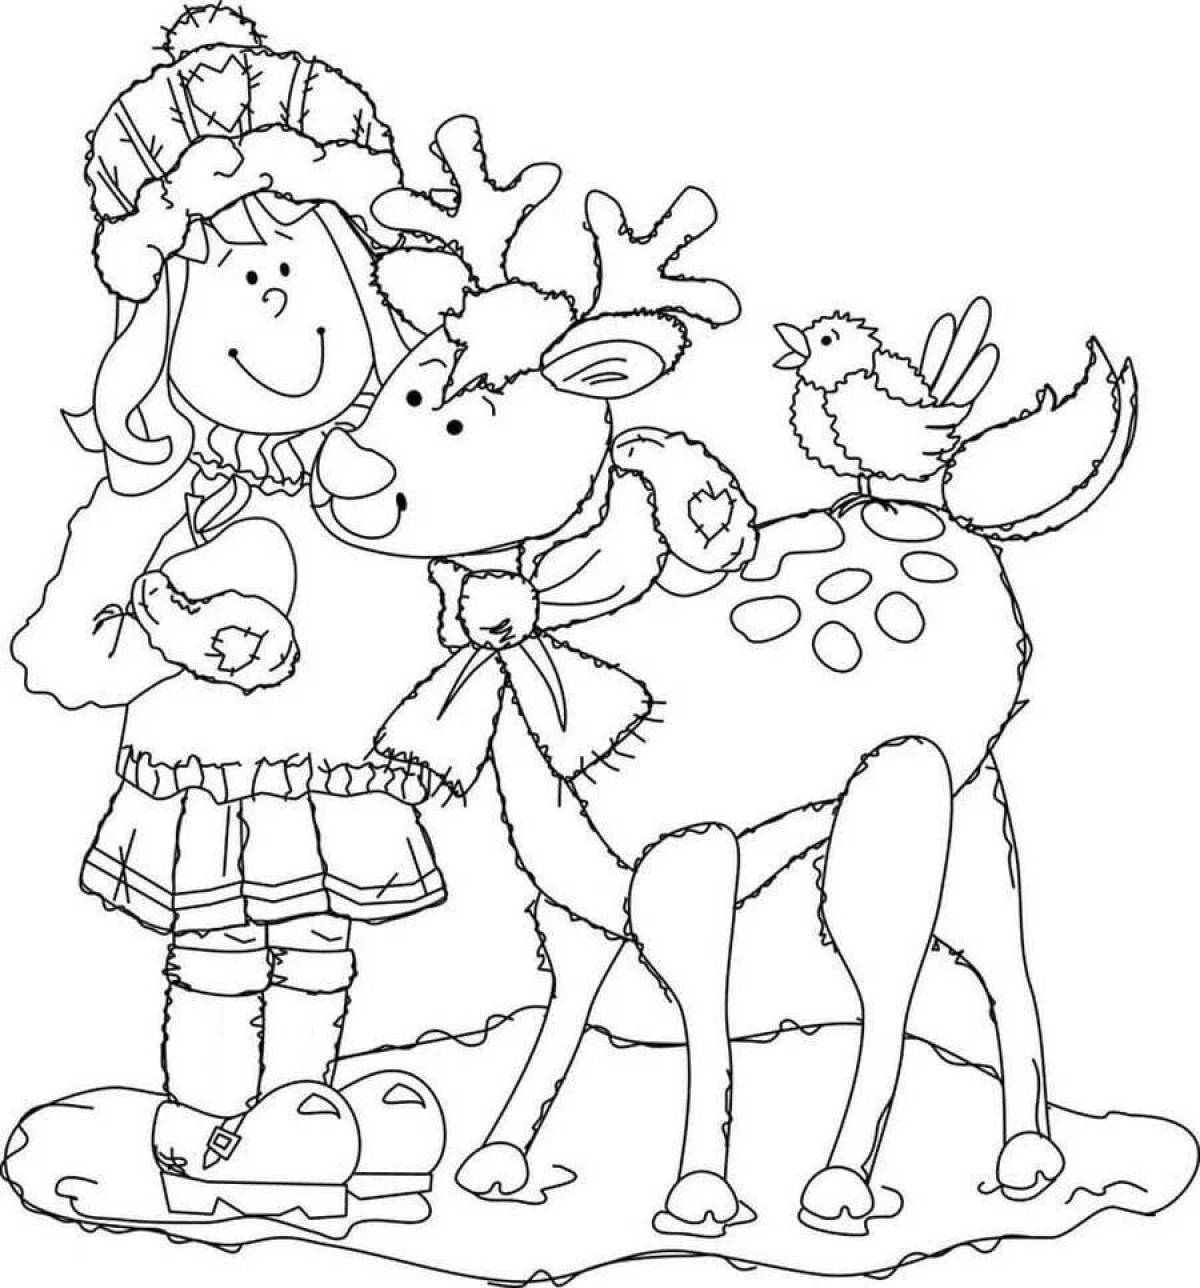 Coloring book for girls deer